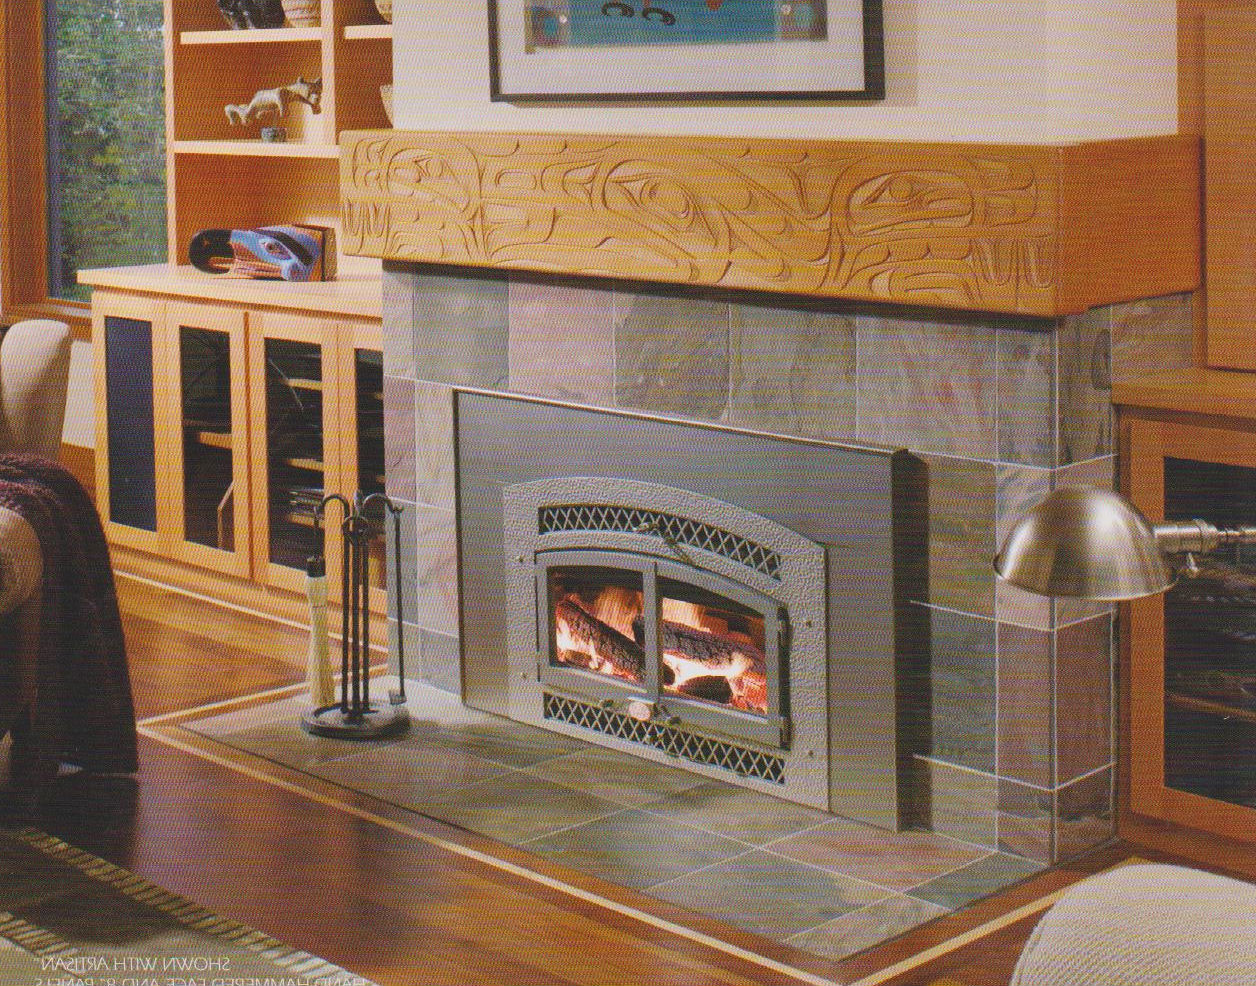 napoleon fireplace insert, ravenna 40 fireplace insert, wood burning fireplace insert installation, gas fireplace insert hingham